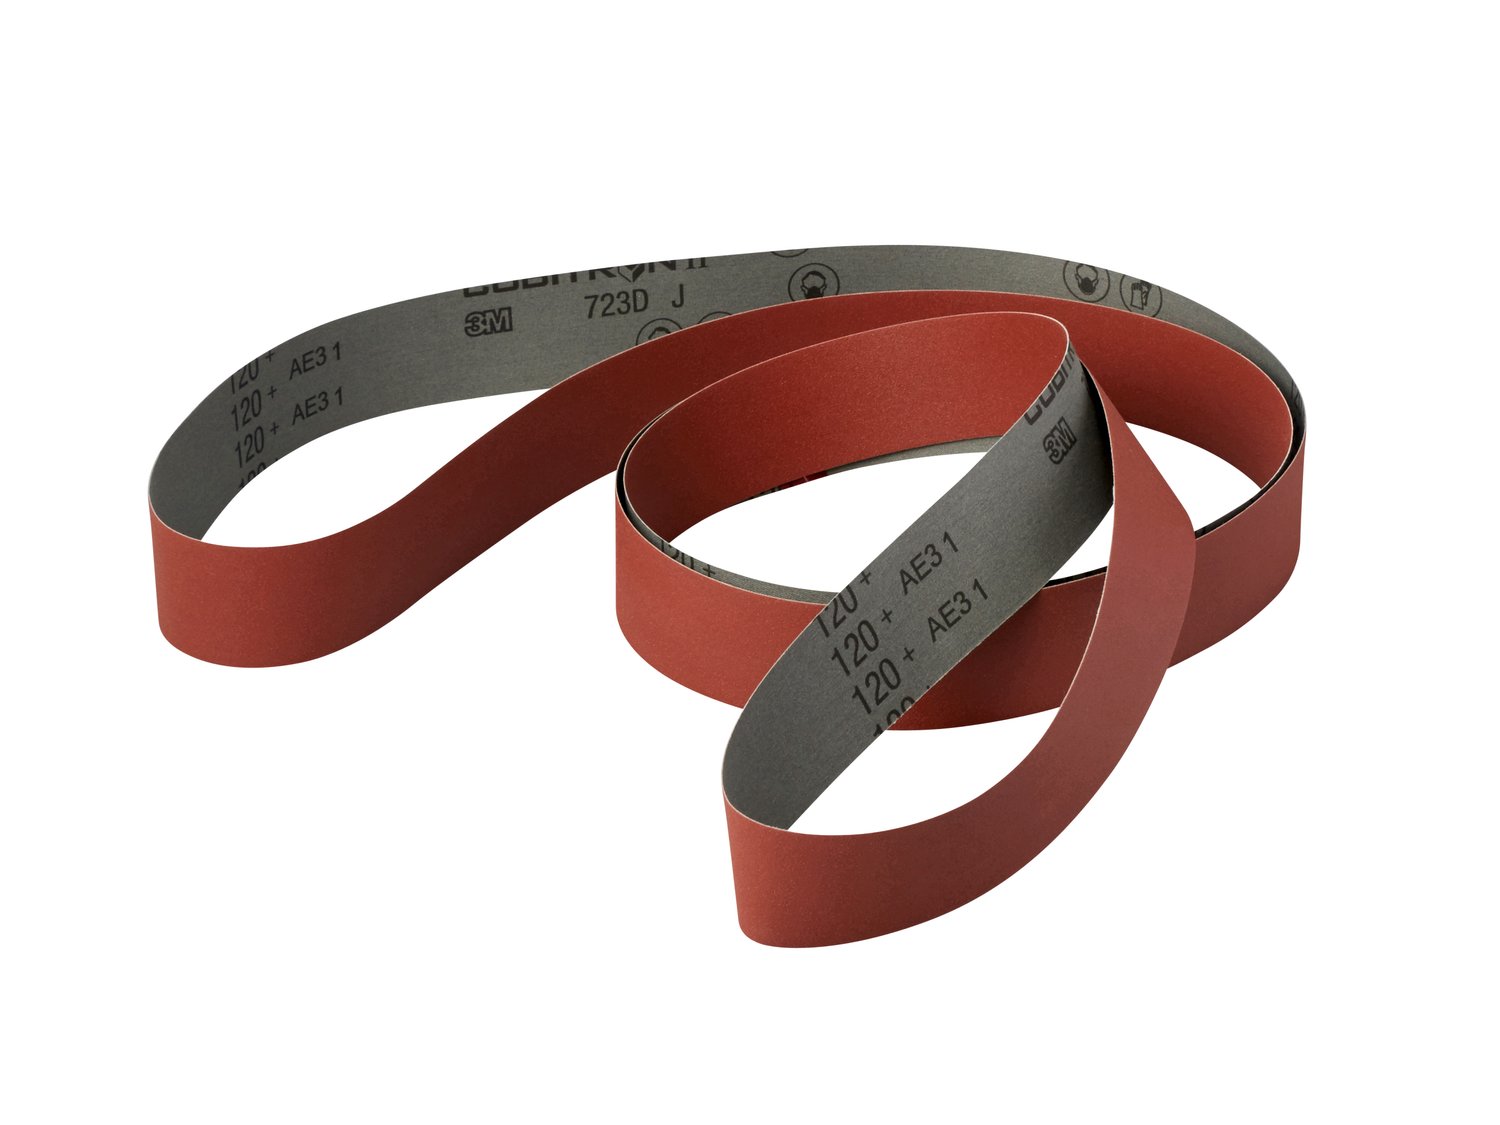 7010515187 - 3M Cubitron ll Cloth Belt 723D, 150+ J-weight, 5 in x 118-5/8 in,
Film-lok, Full-flex